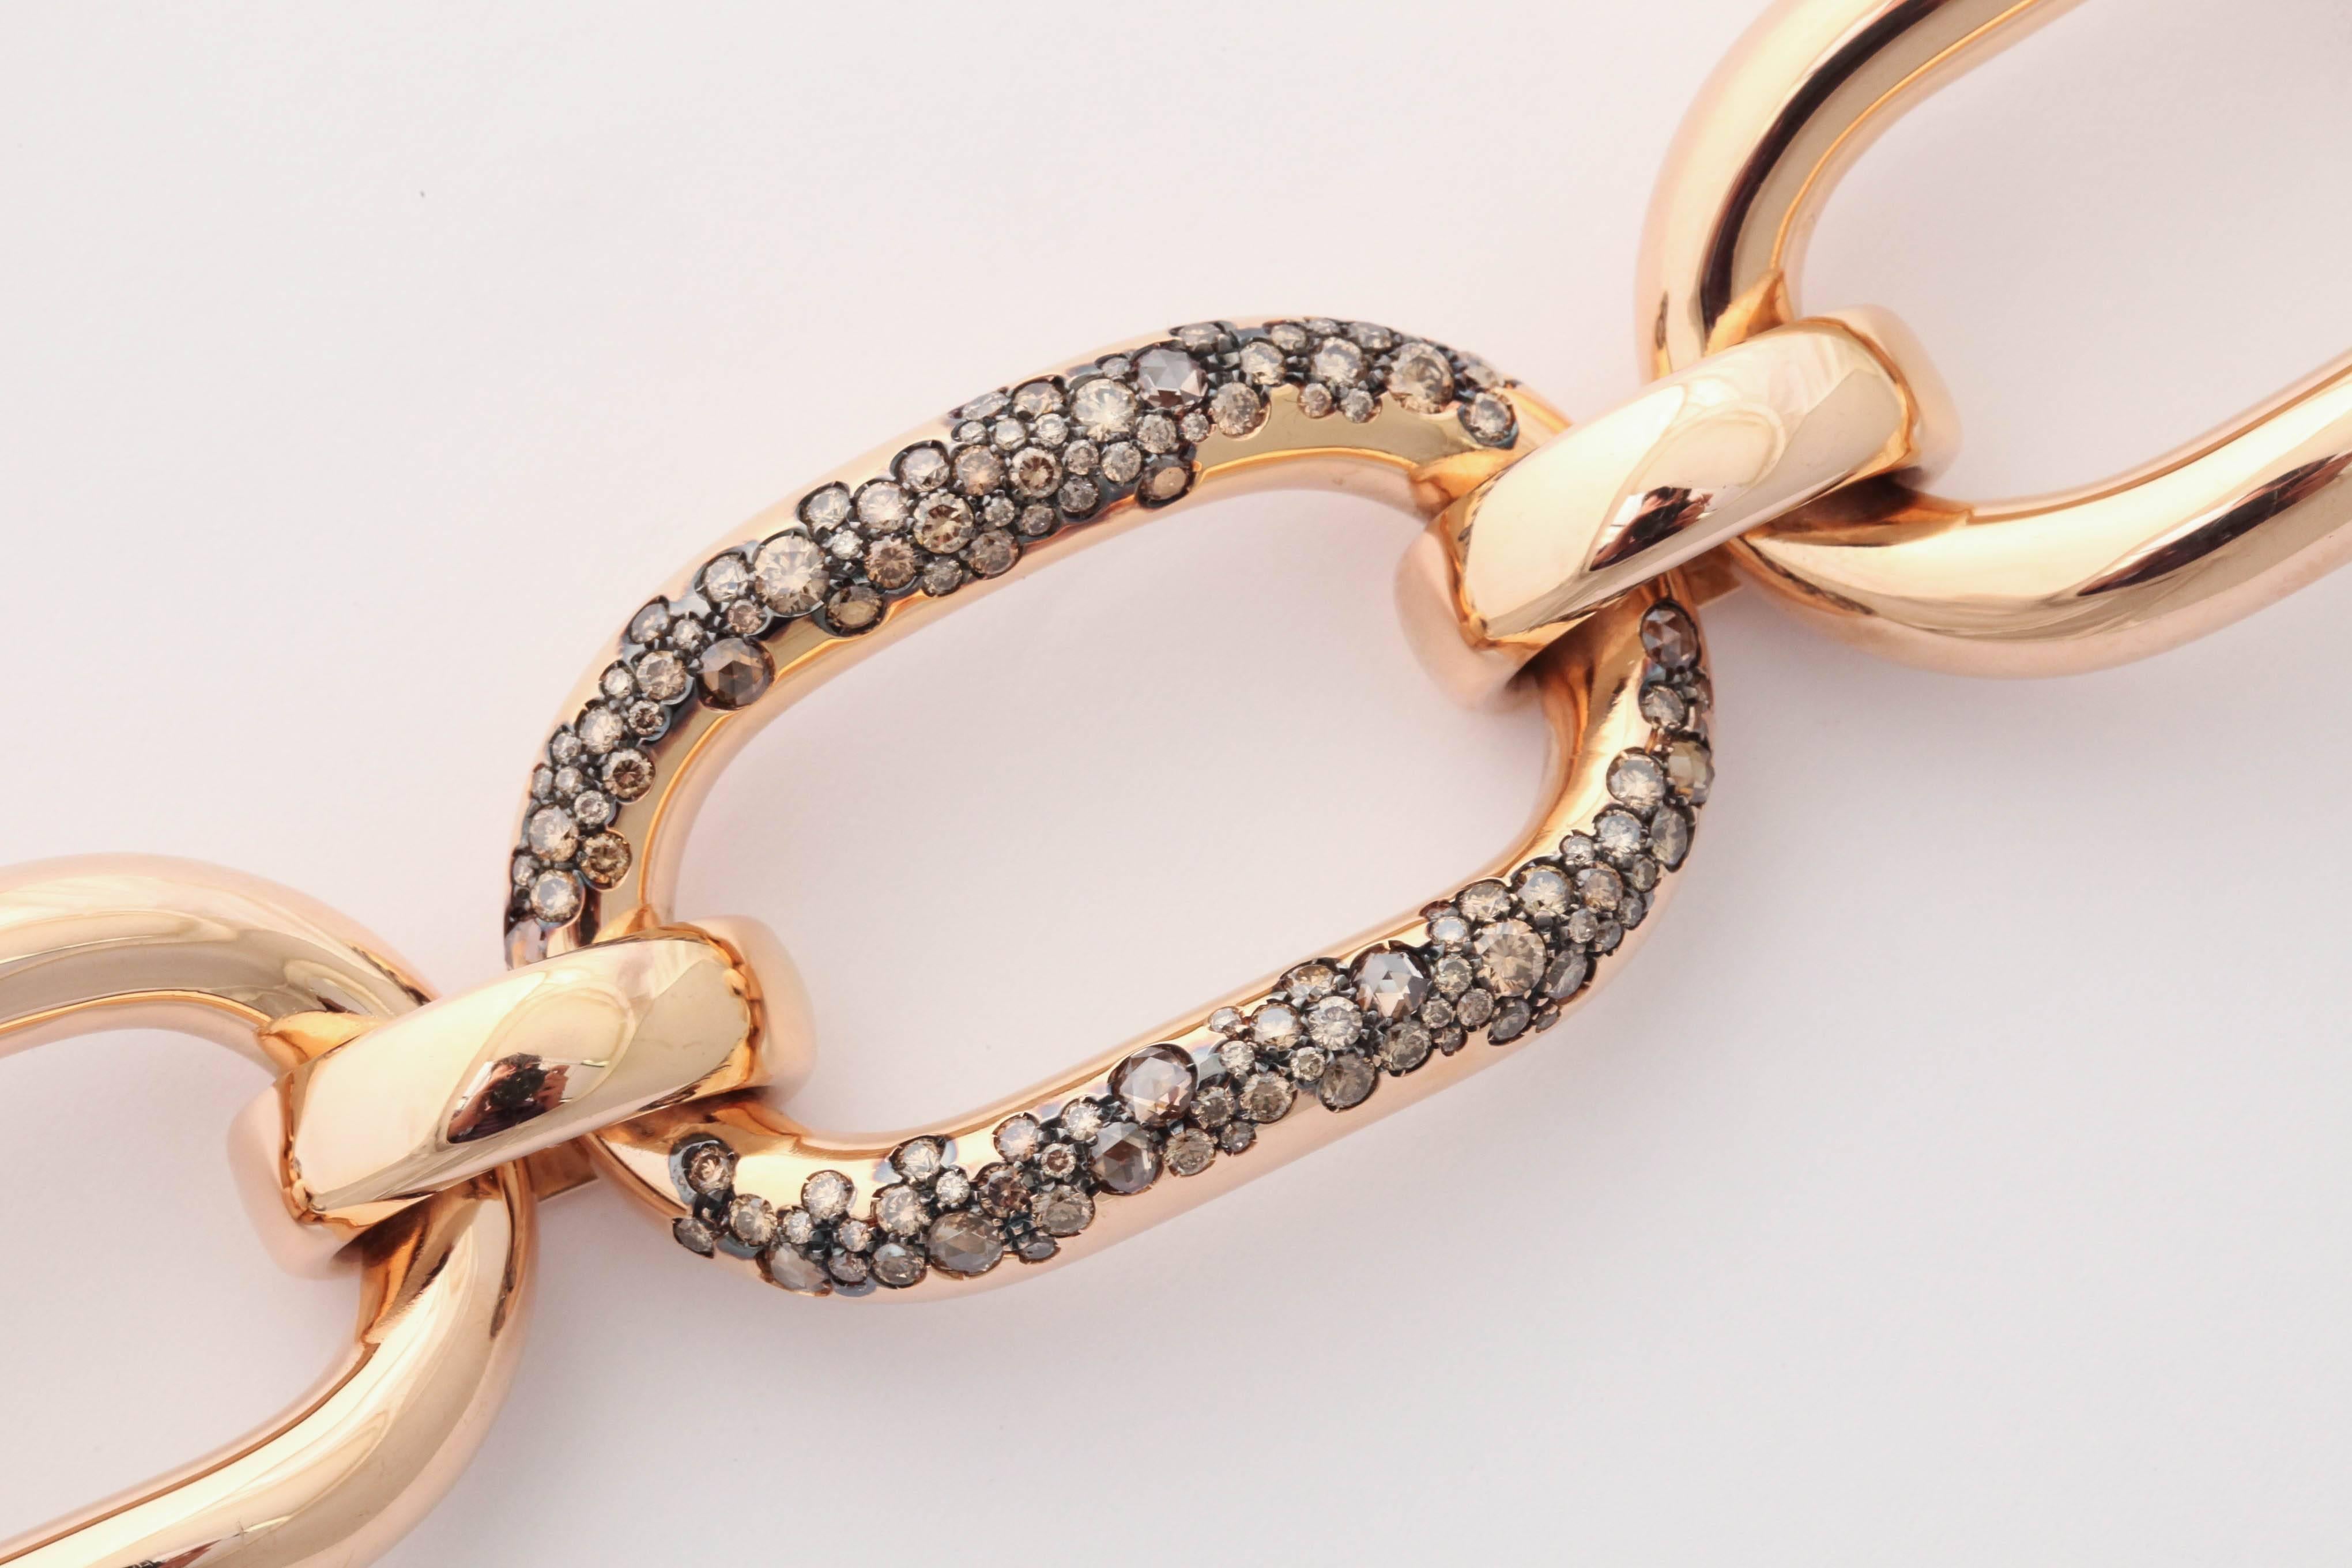 18k rose gold flexible bracelet, 
200 round brilliant cut cognac diamonds and 19 20th century cut cognac diamonds total weight 6.21  93.5 grams